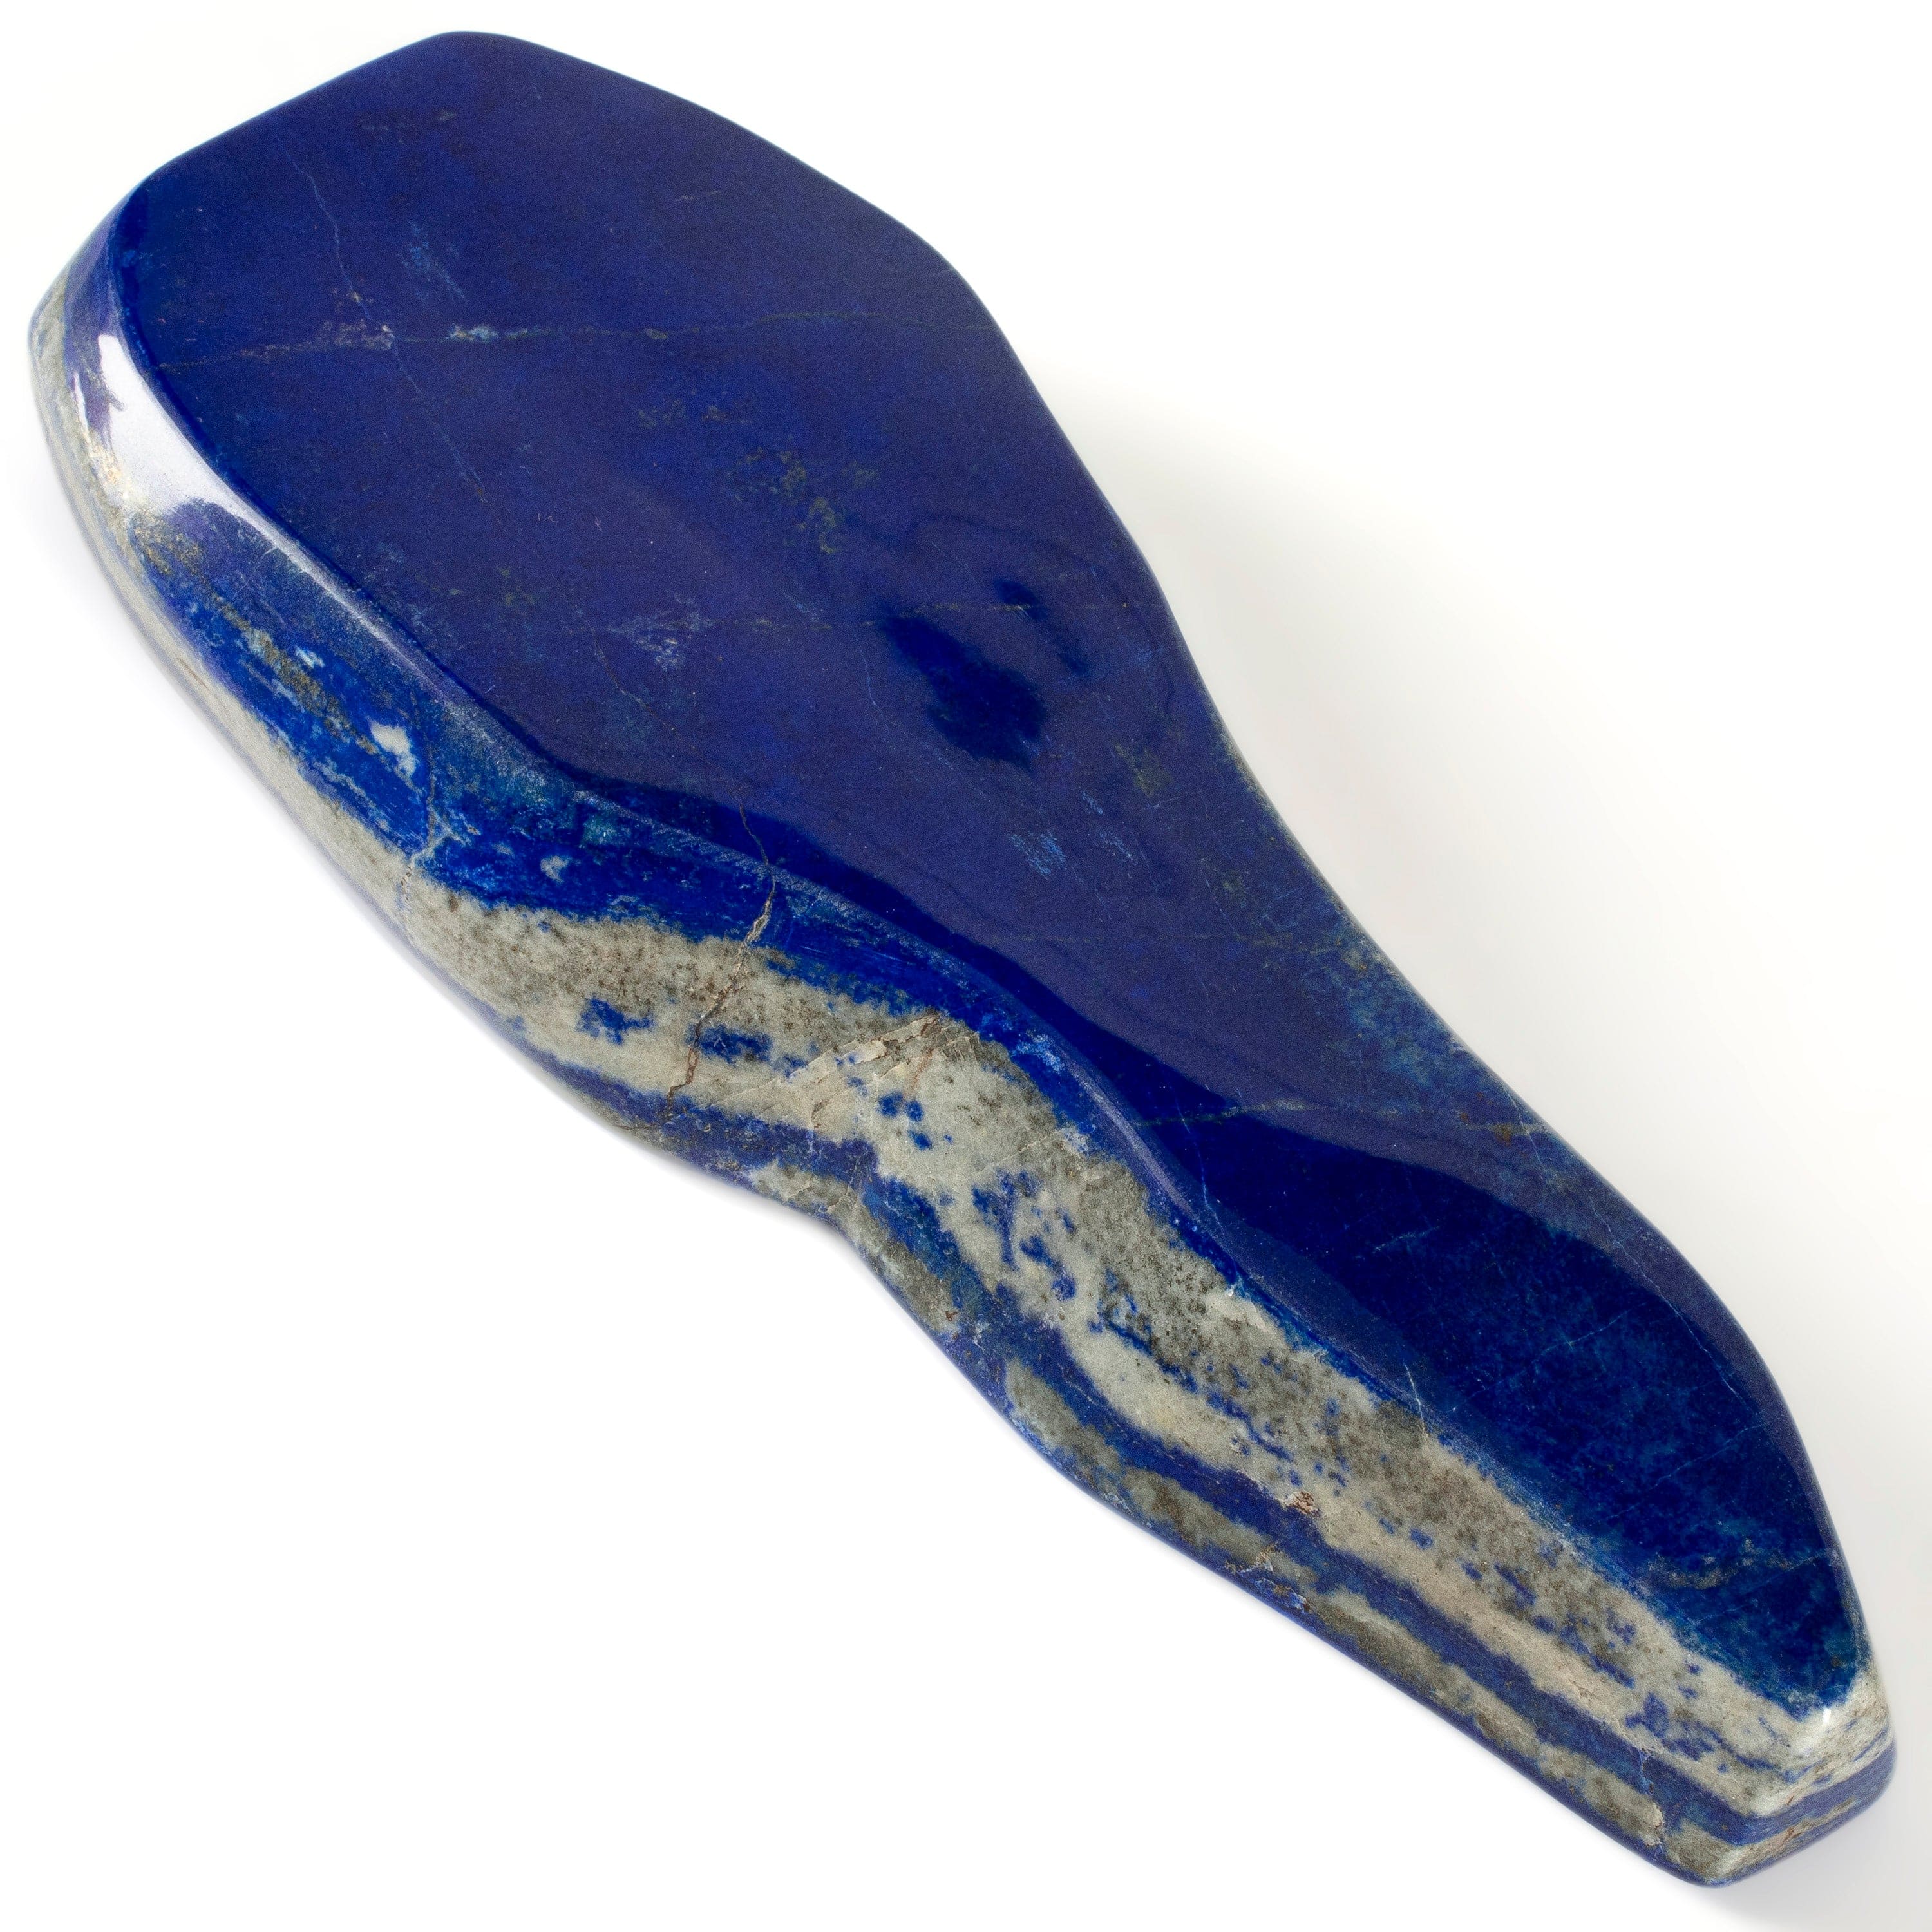 Kalifano Lapis Lapis Lazuli Freeform from Afghanistan - 11" / 1,910 grams LP1900.002